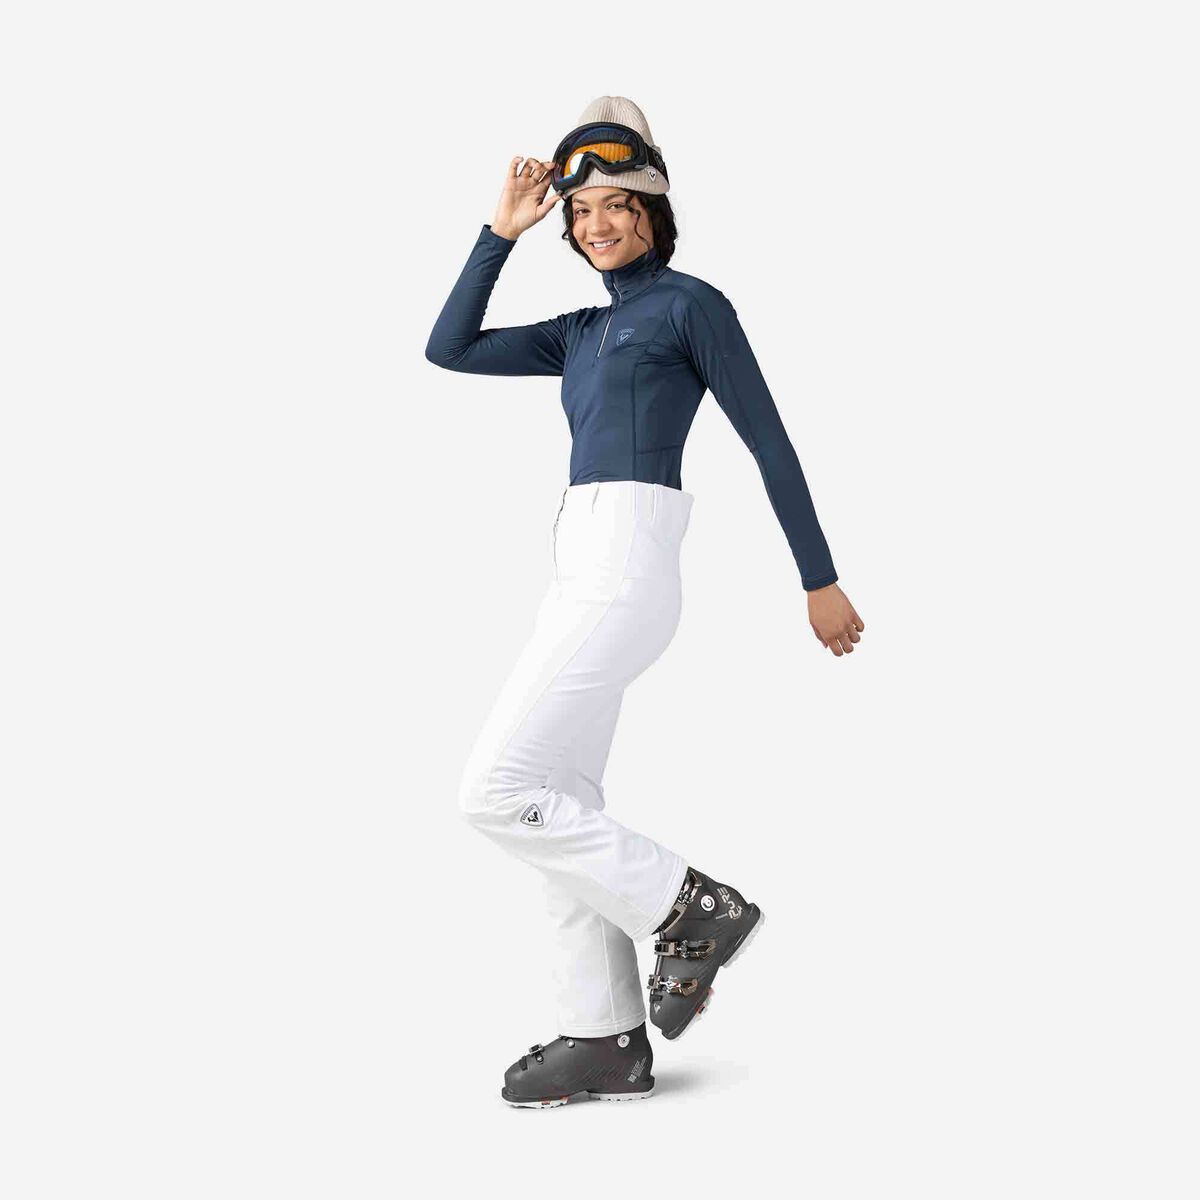 Women's Soft Shell Ski pants